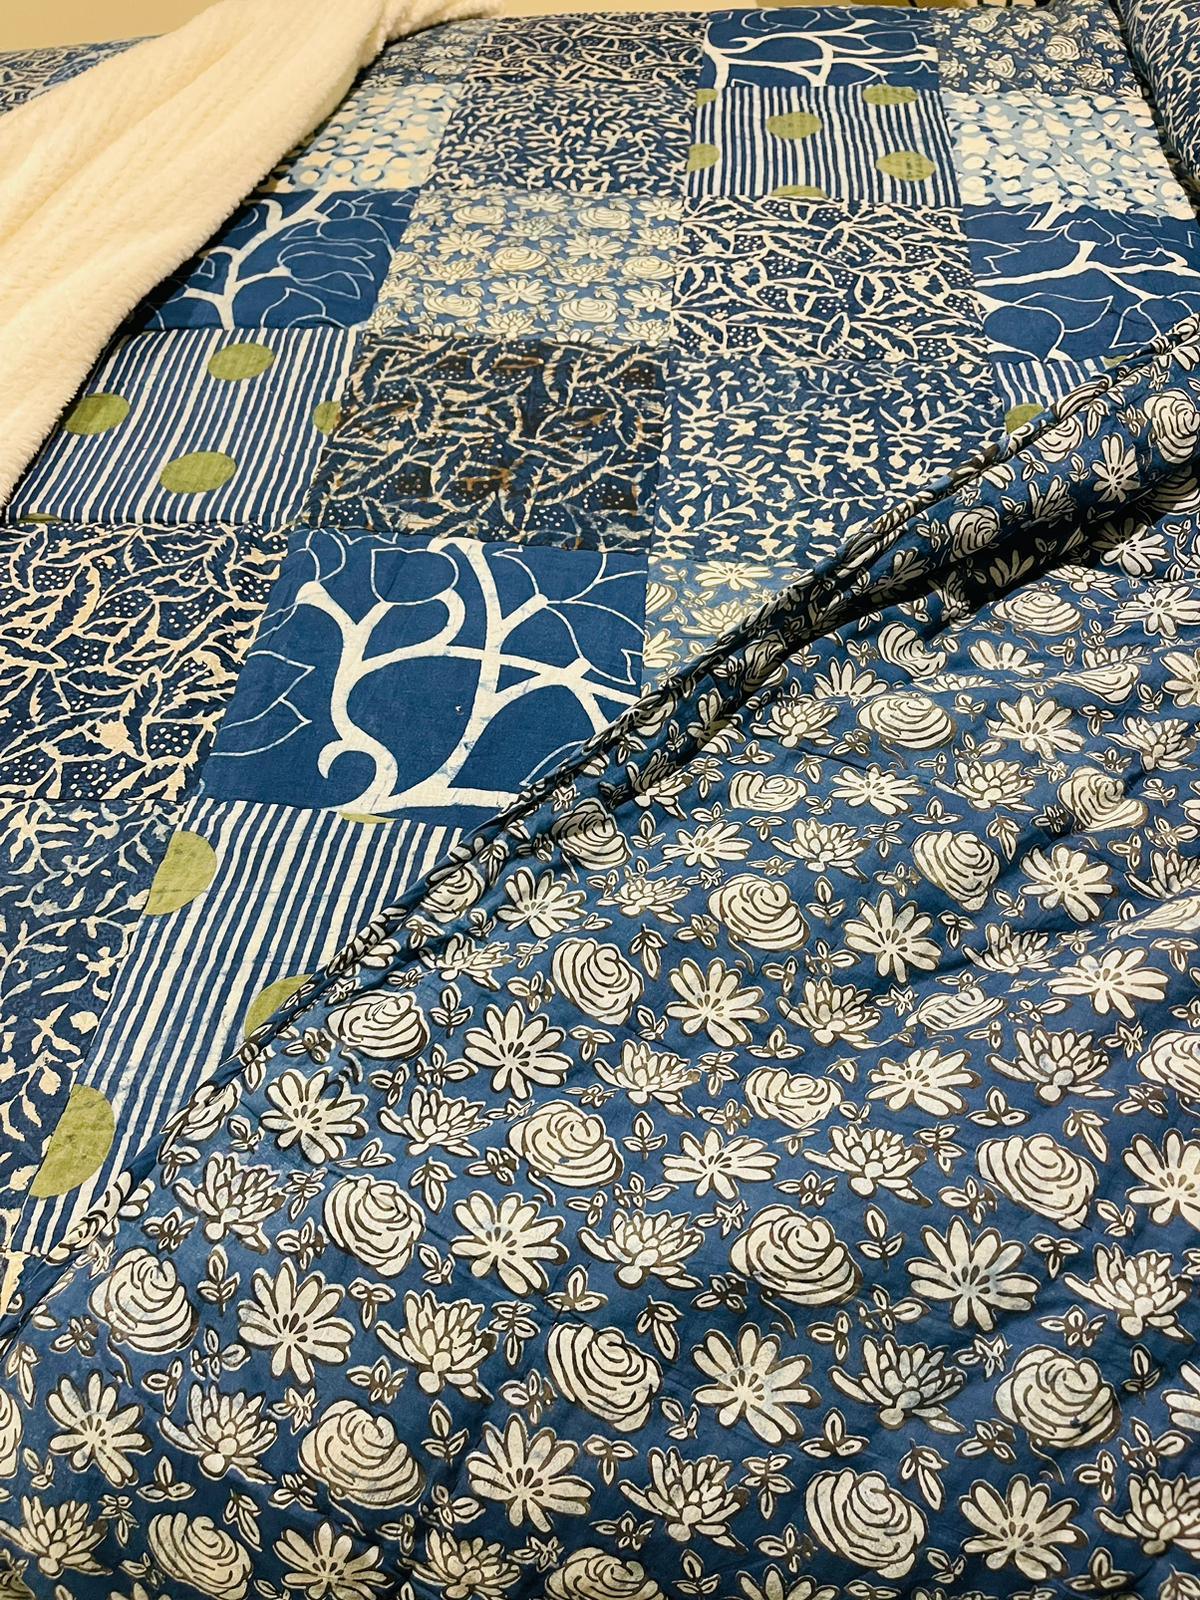 Indigo Patchwork Cotton Filled Quilt/Bedspread Hand Block print - Rooii by Tuvisha